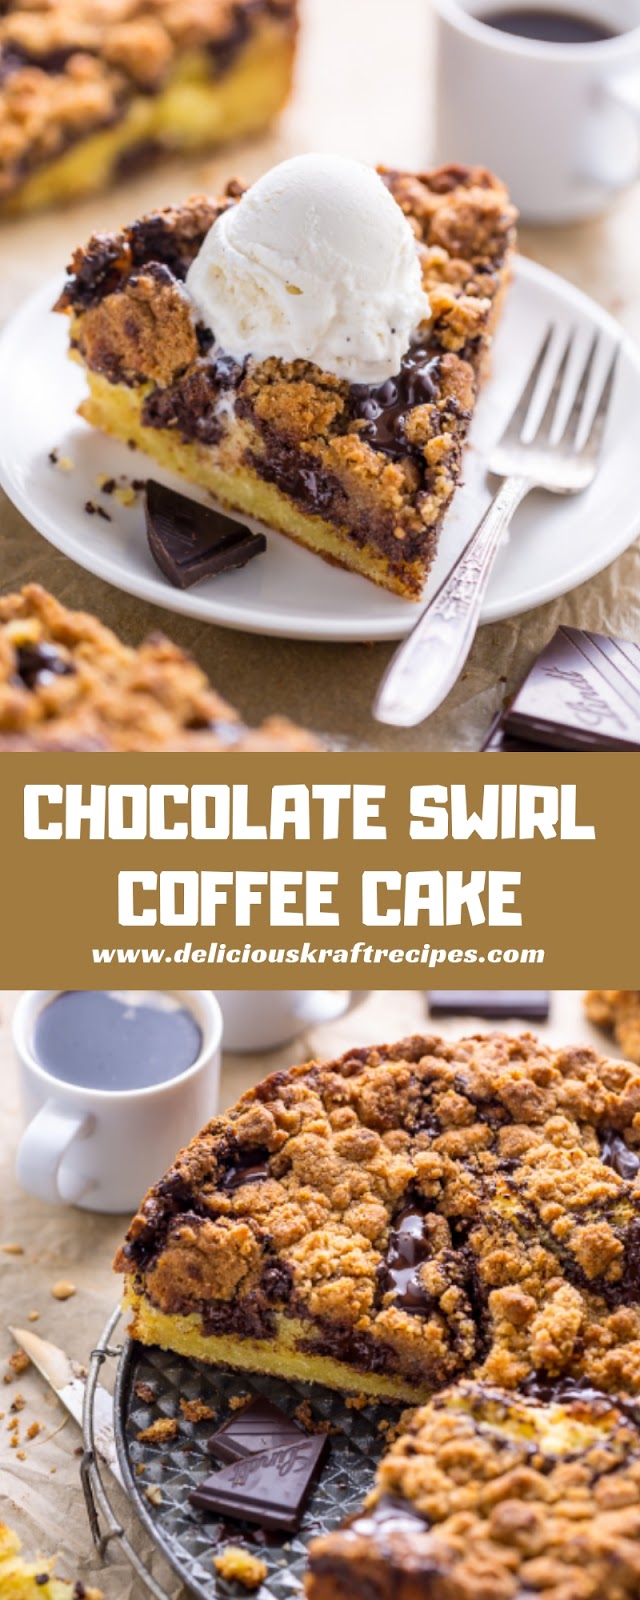 CHOCOLATE SWIRL COFFEE CAKE